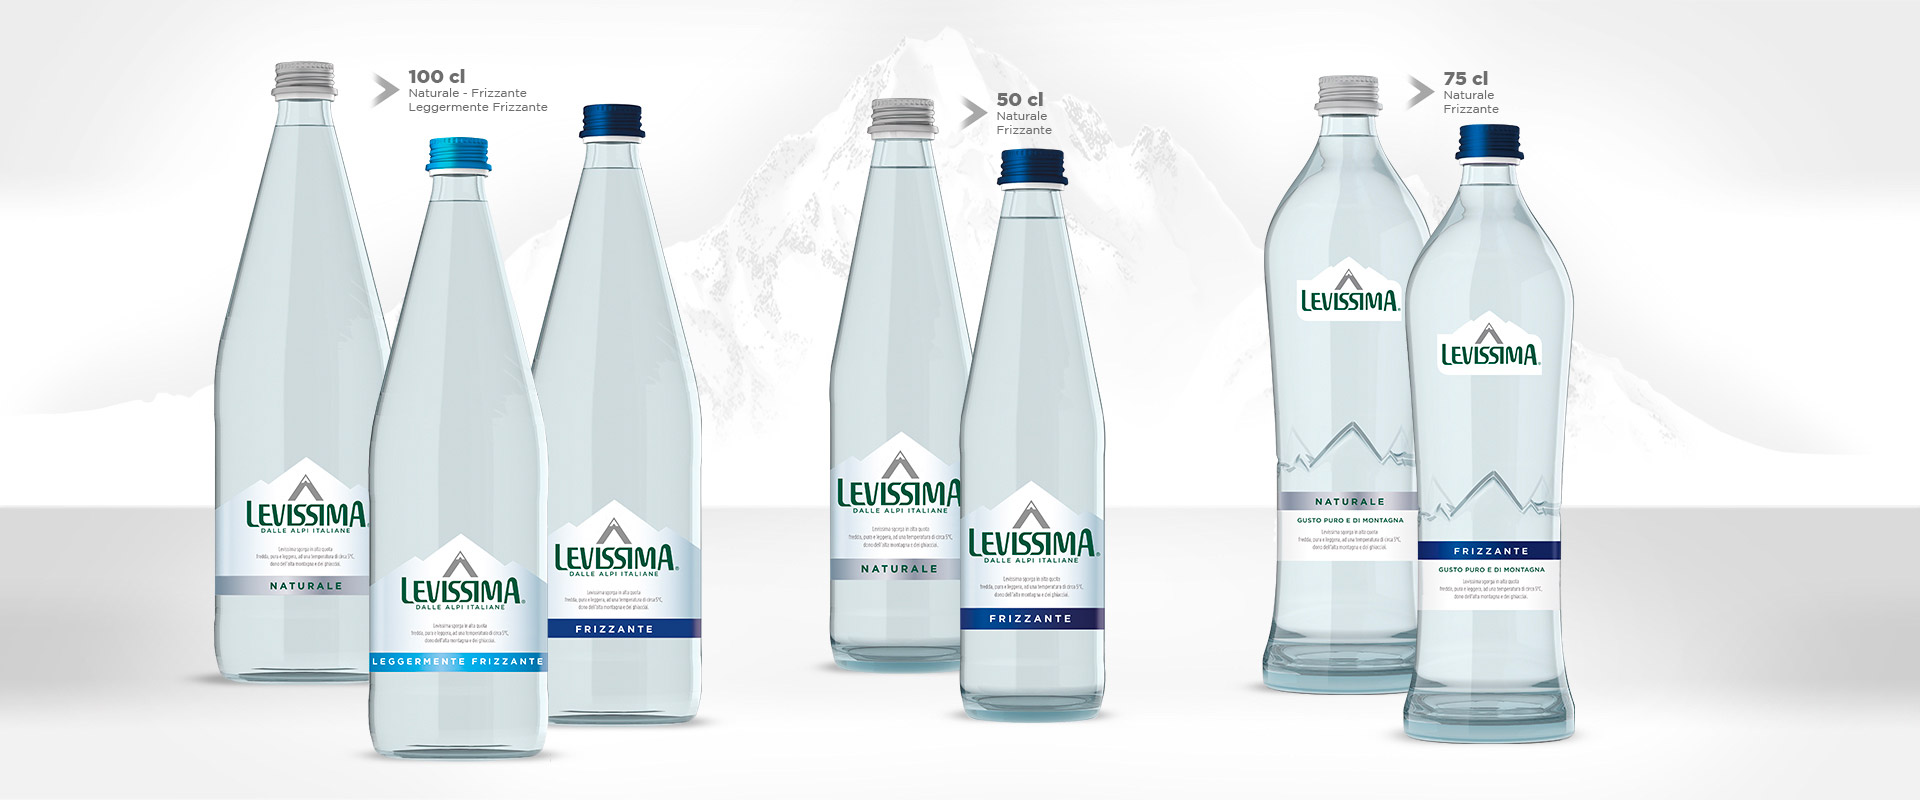 The sizes of Levissima glass bottles